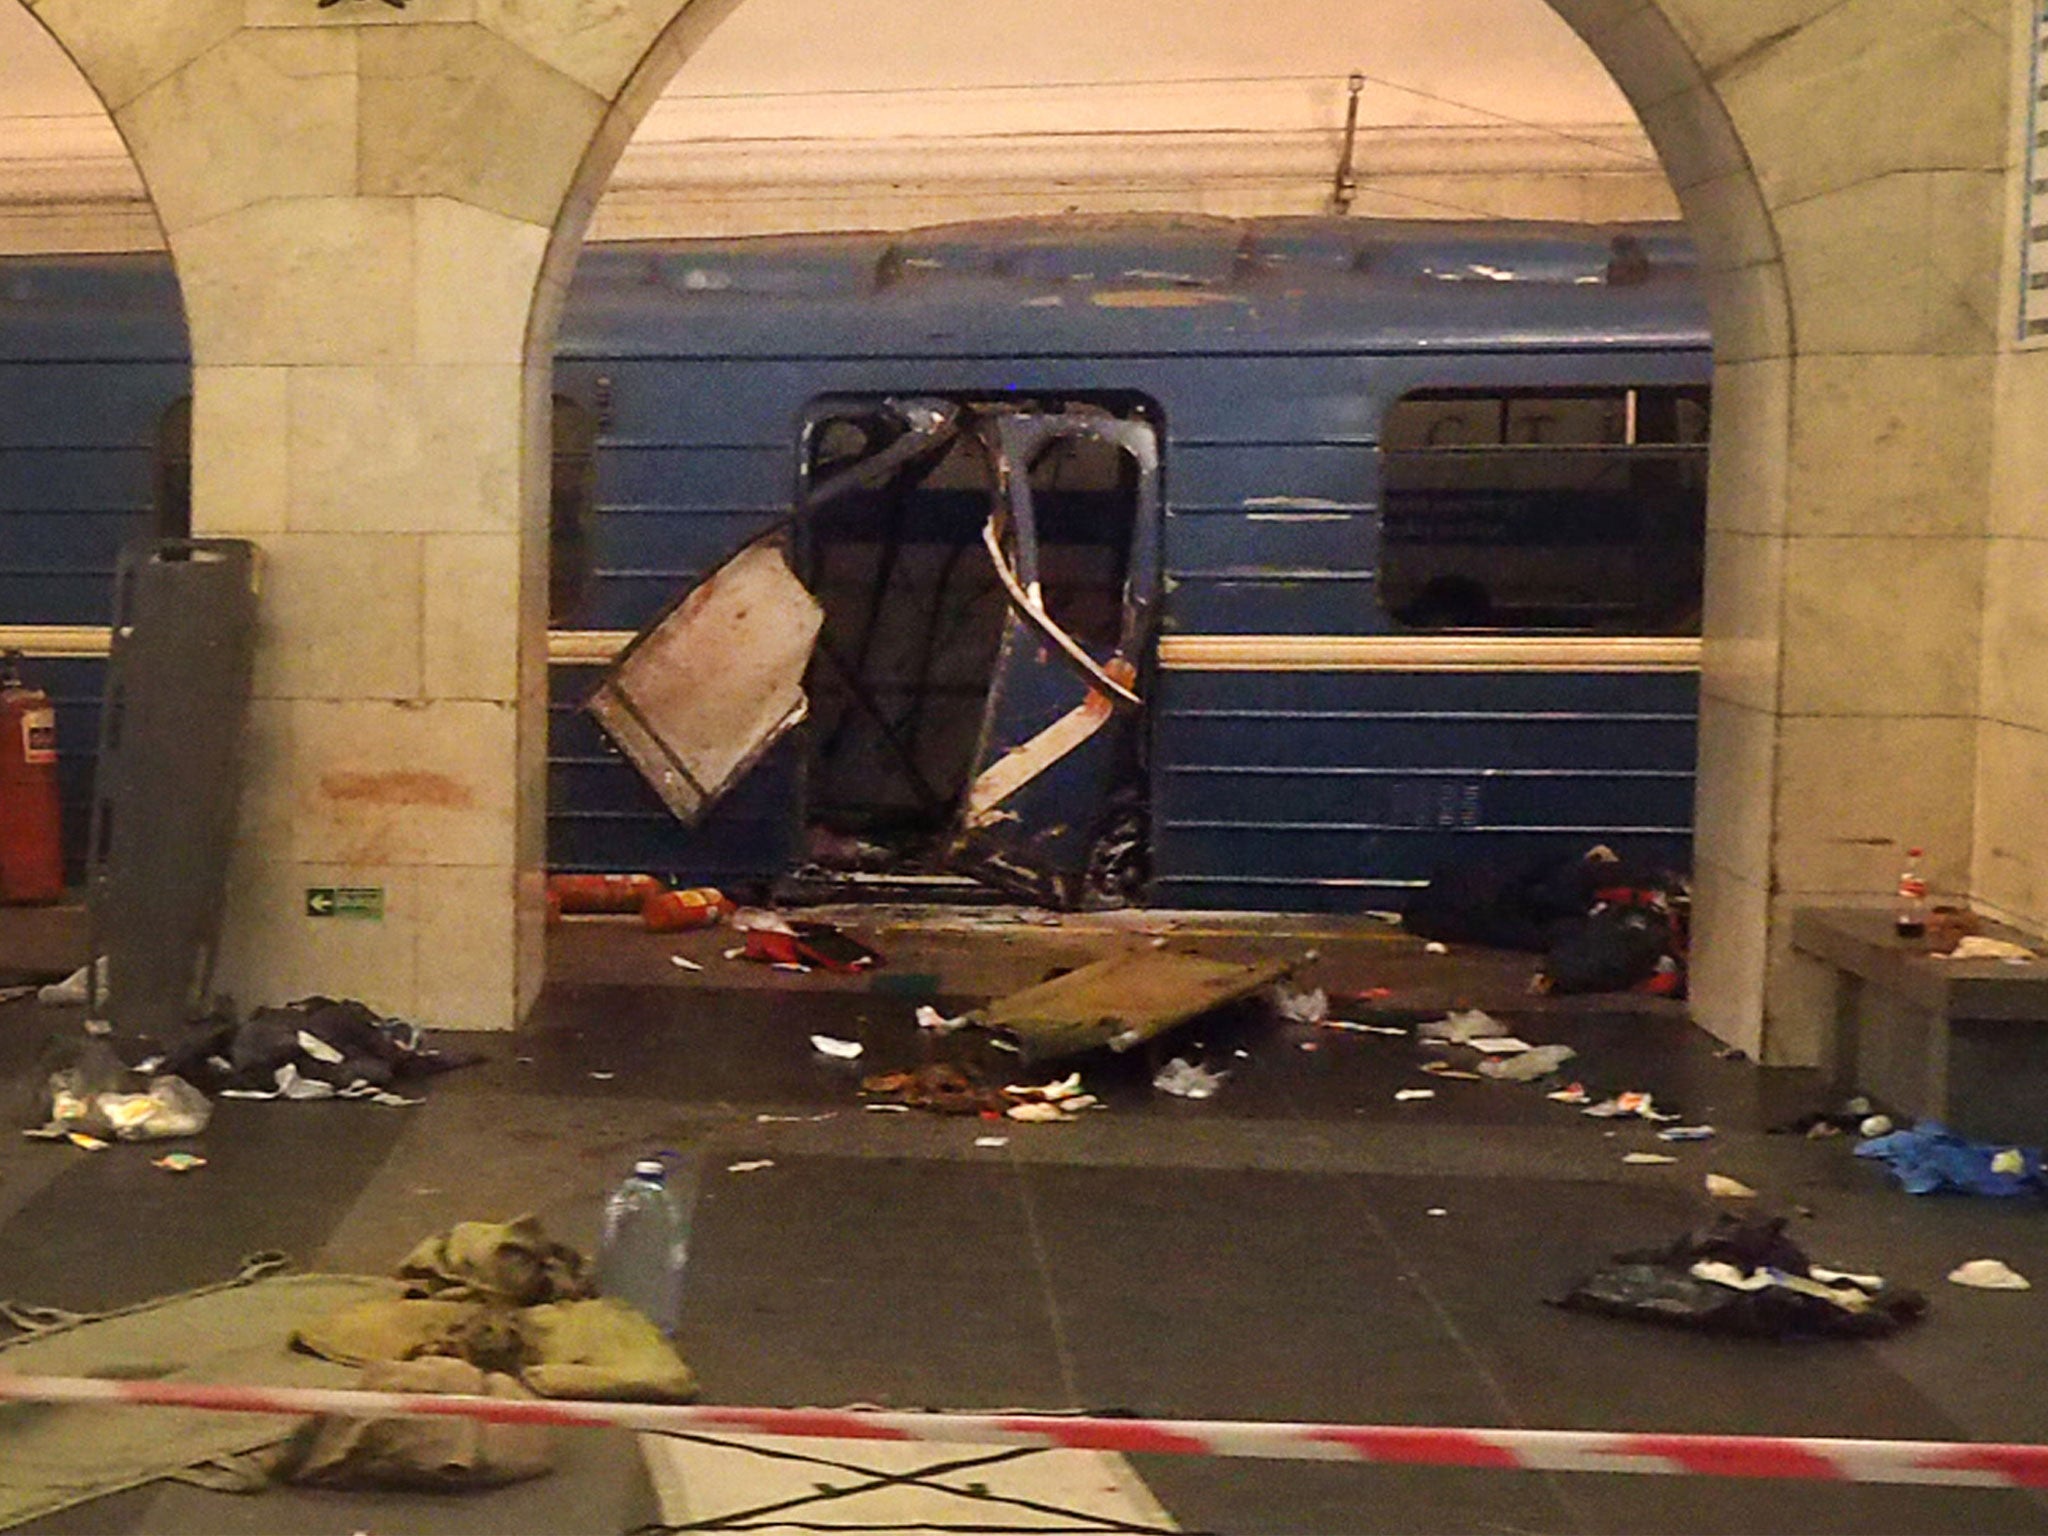 Bombing on St Petersburg metro leaves at least 11 dead